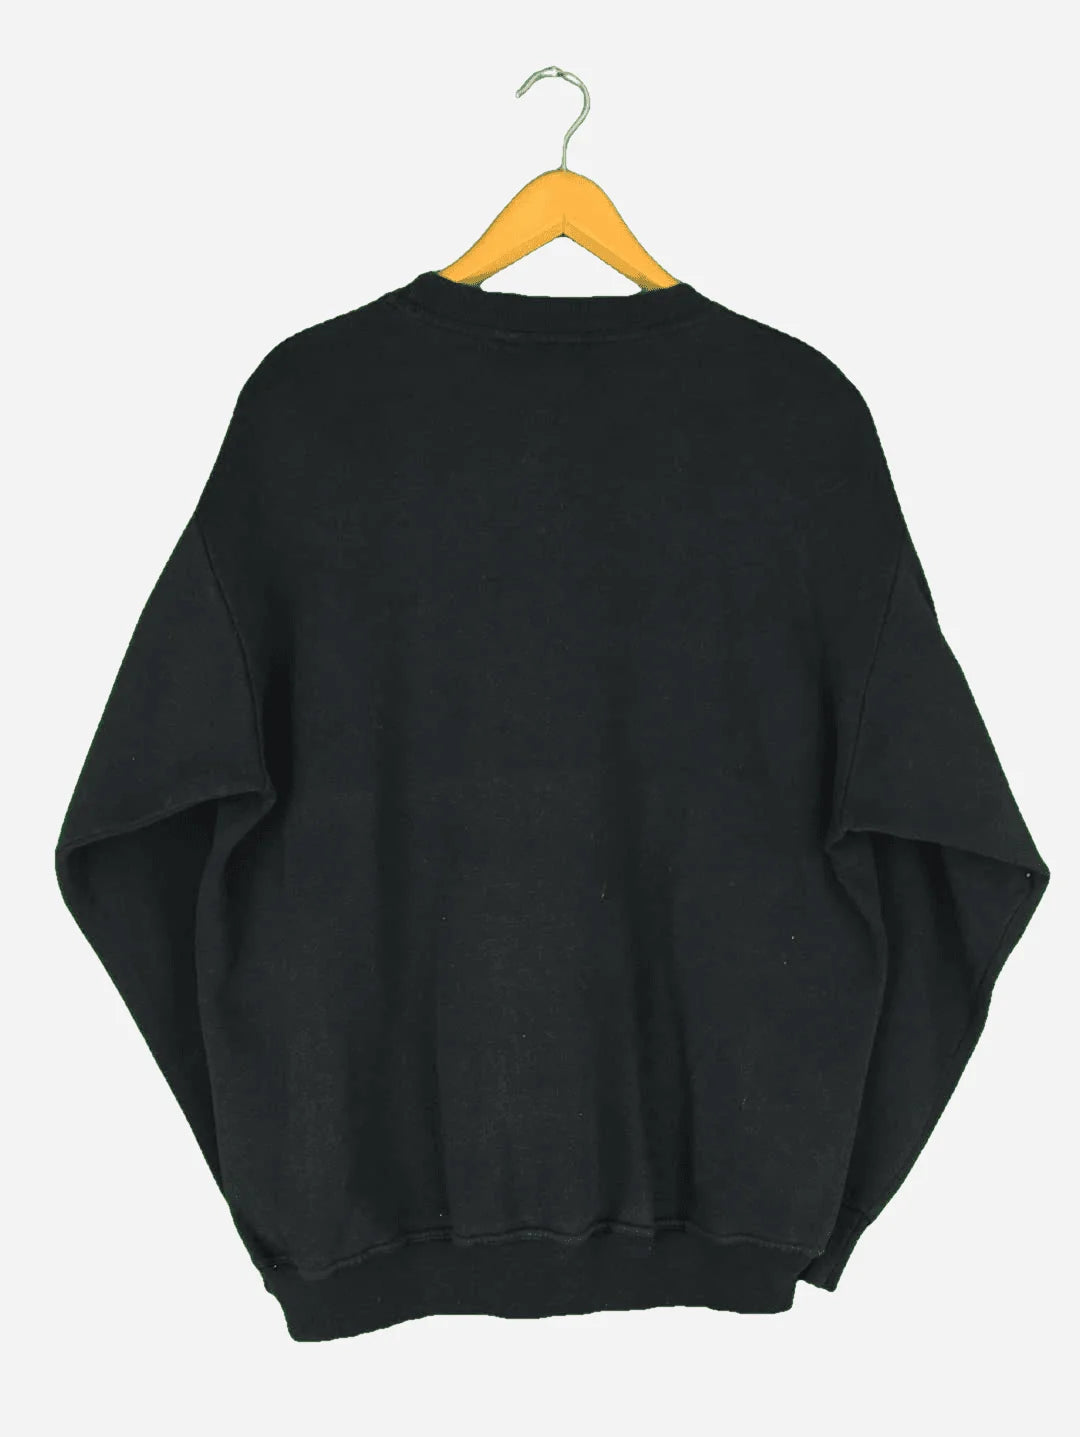 Kappa Sweater (XL)